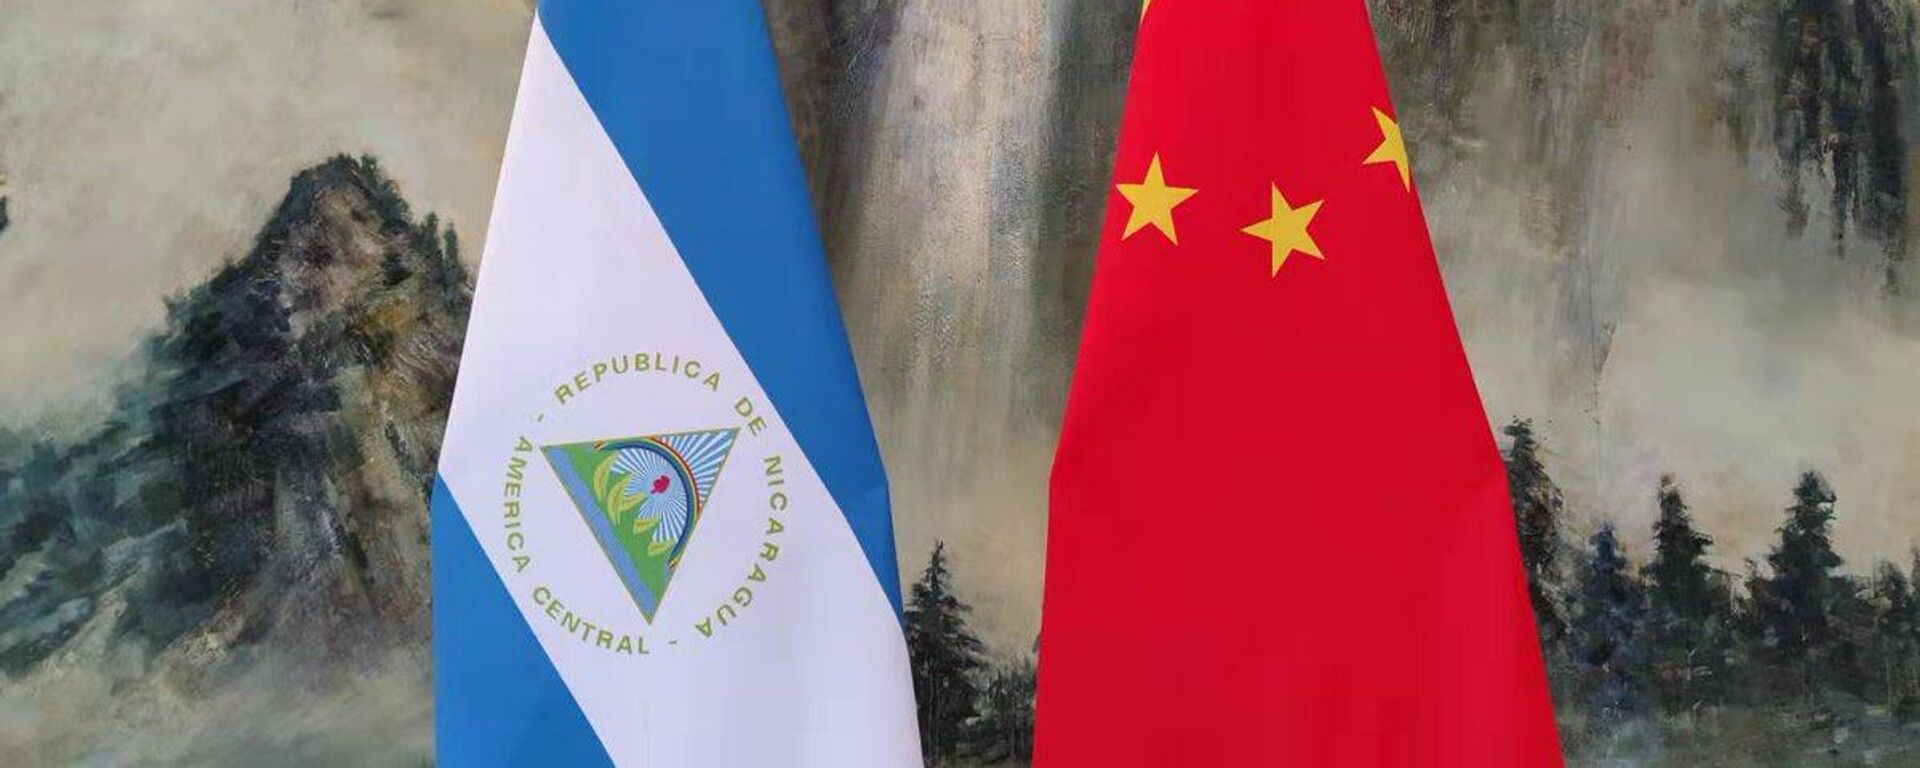 Banderas de Nicaragua y China - Sputnik Mundo, 1920, 11.12.2021